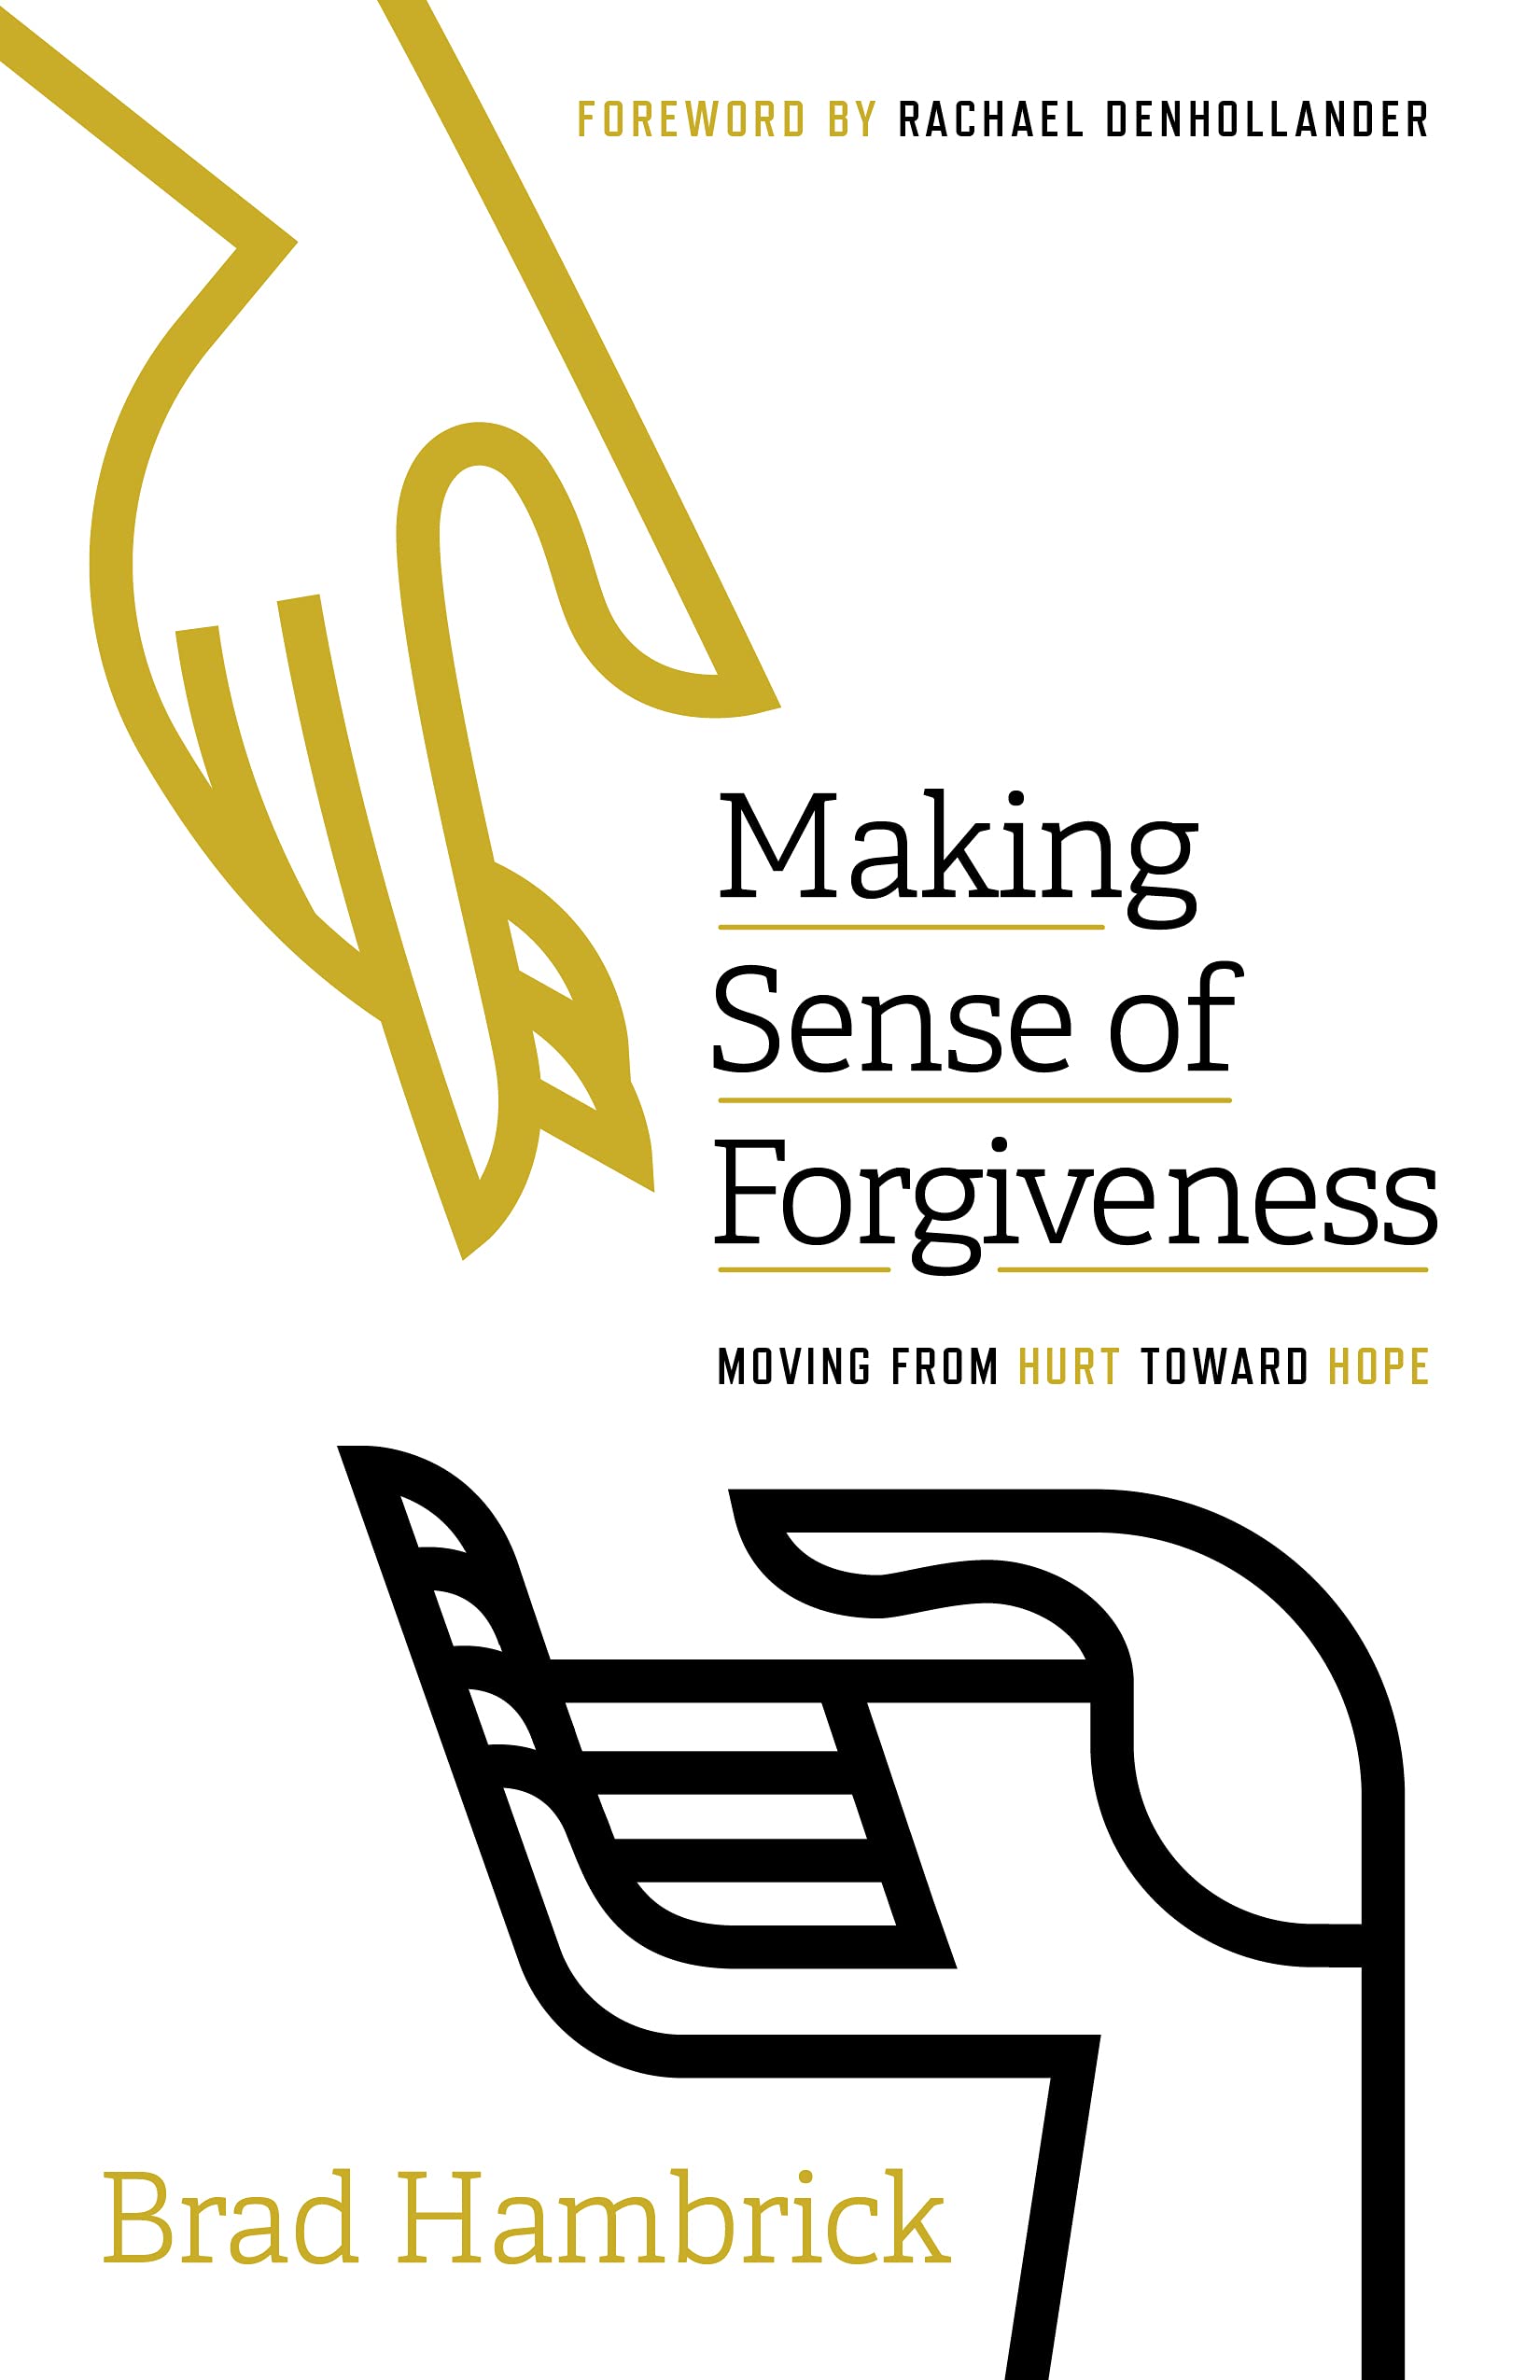 Westminster　of　Forgiveness　Bookstore　Hambrick,　9781645071433　Brad　–　Making　Sense